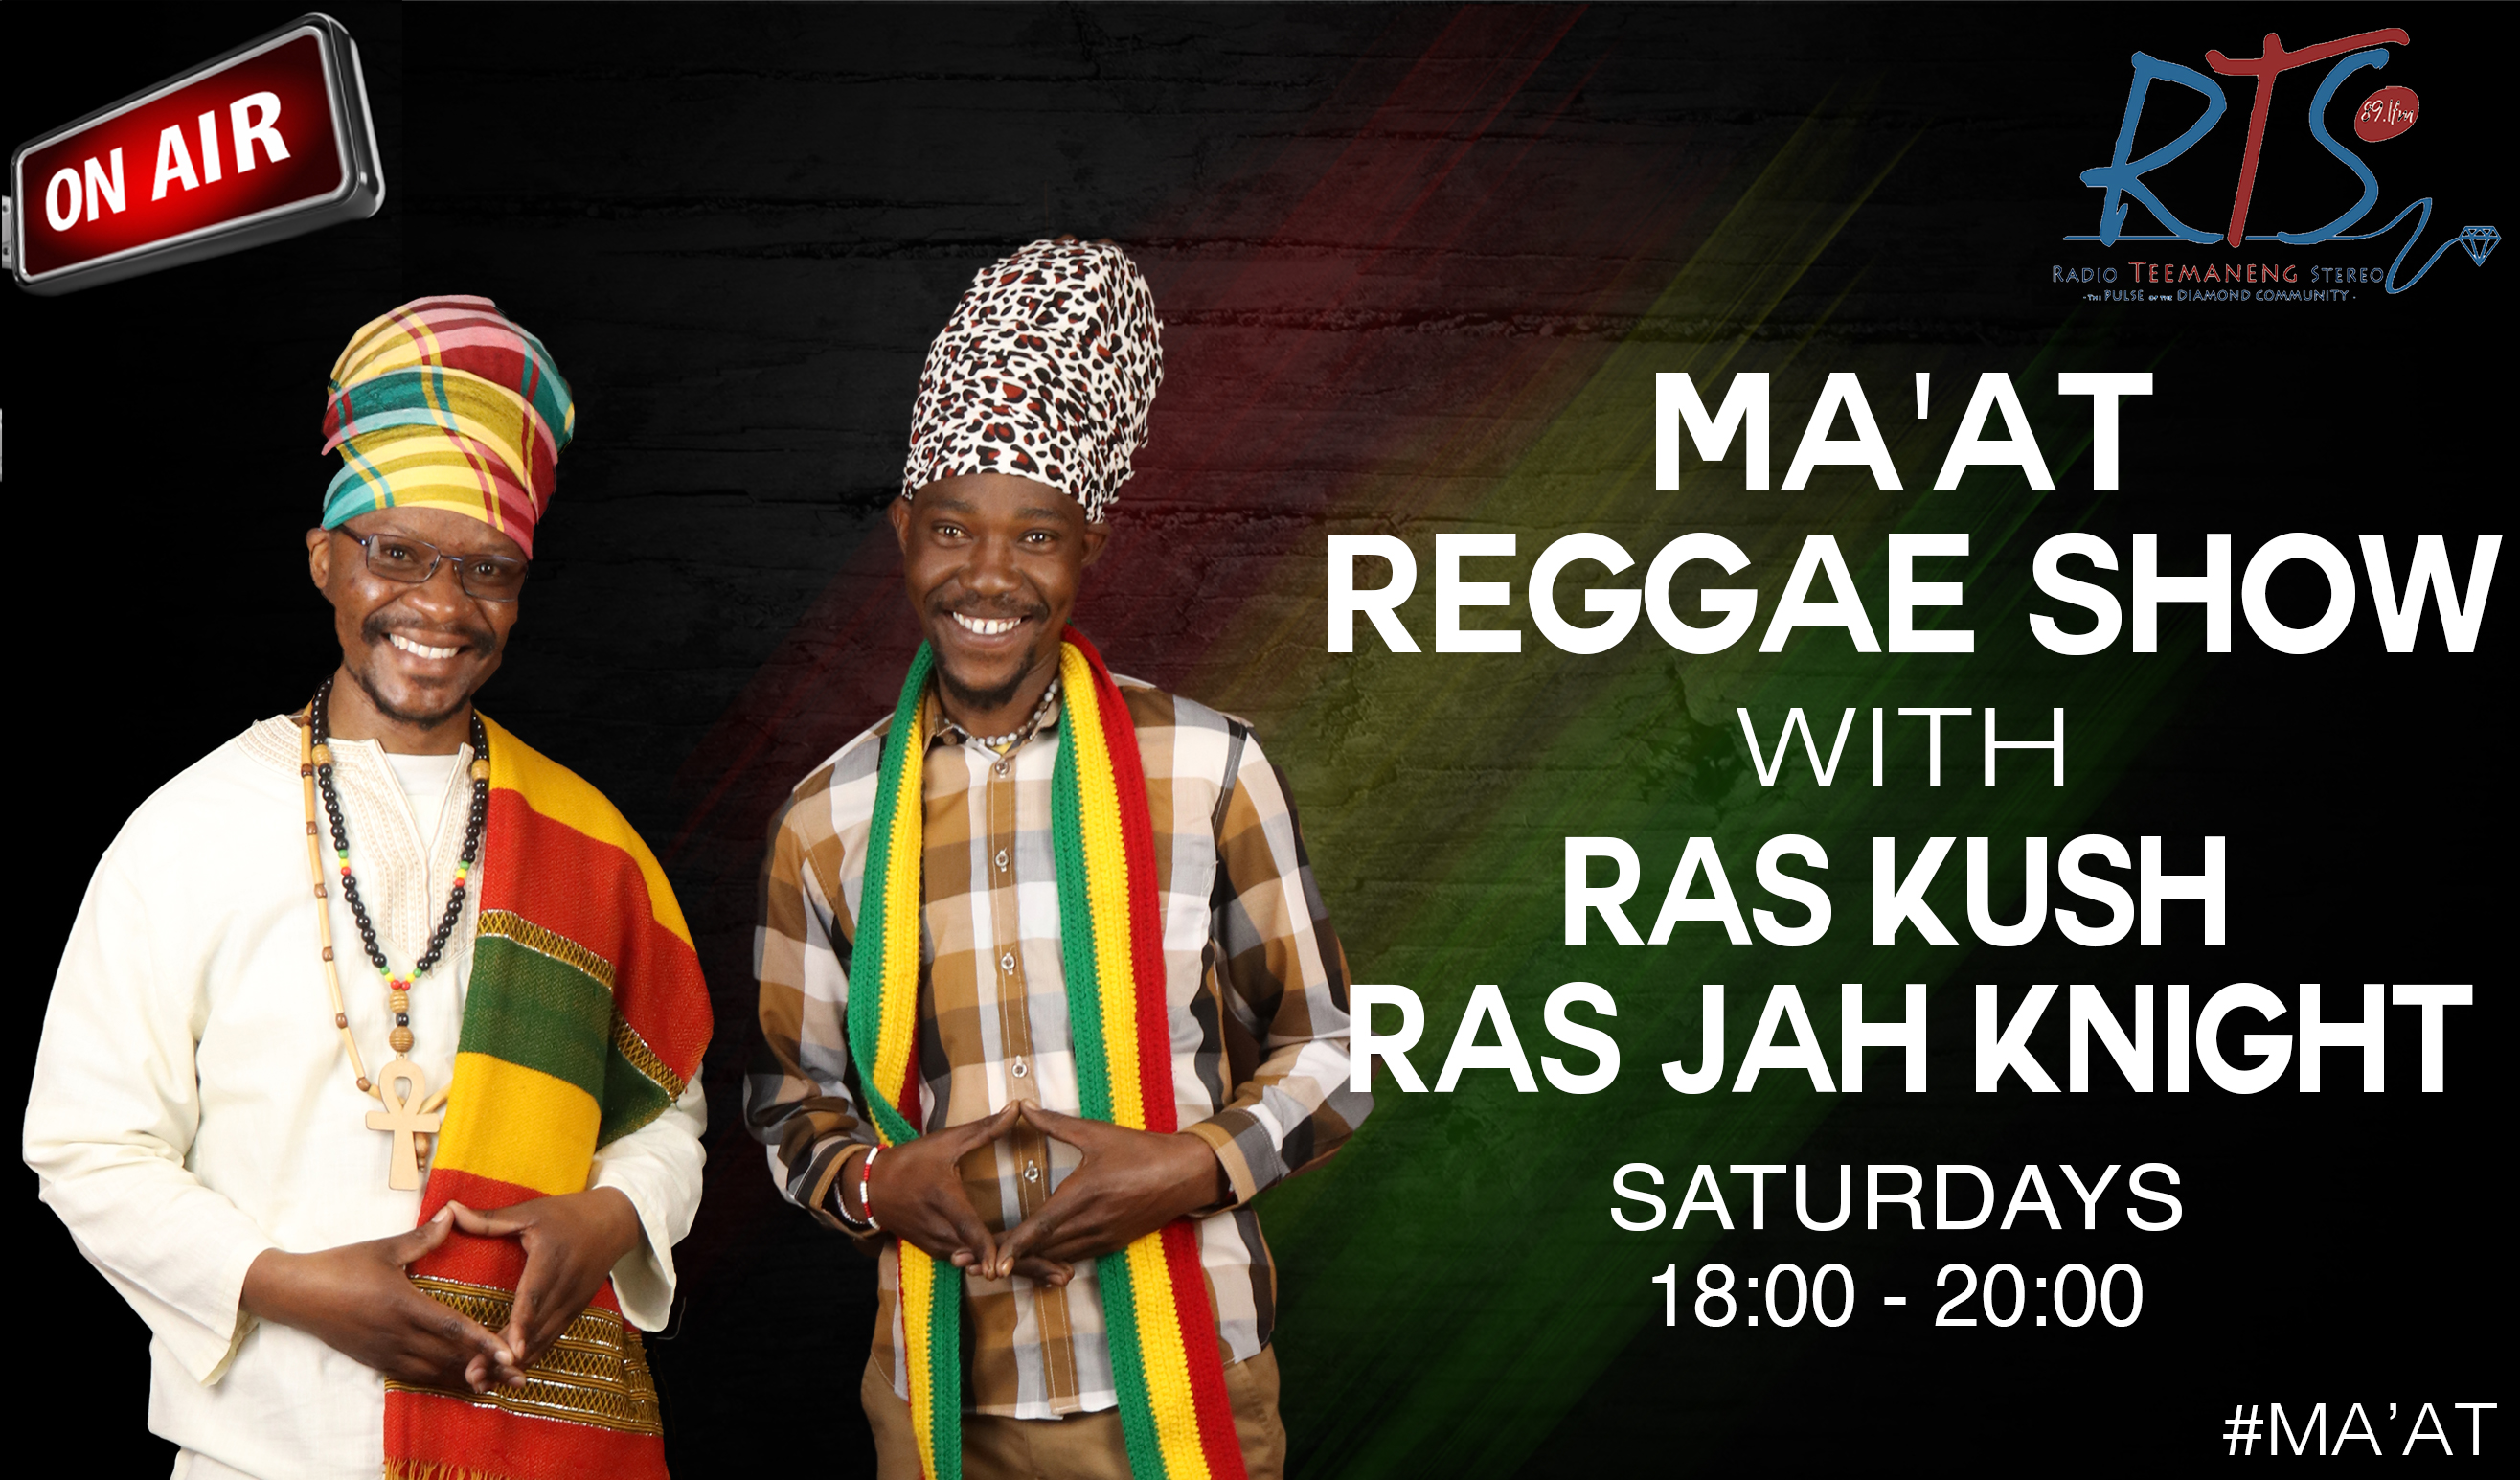 Ma'at Reggae Show Saturday 18:00 - 20:00